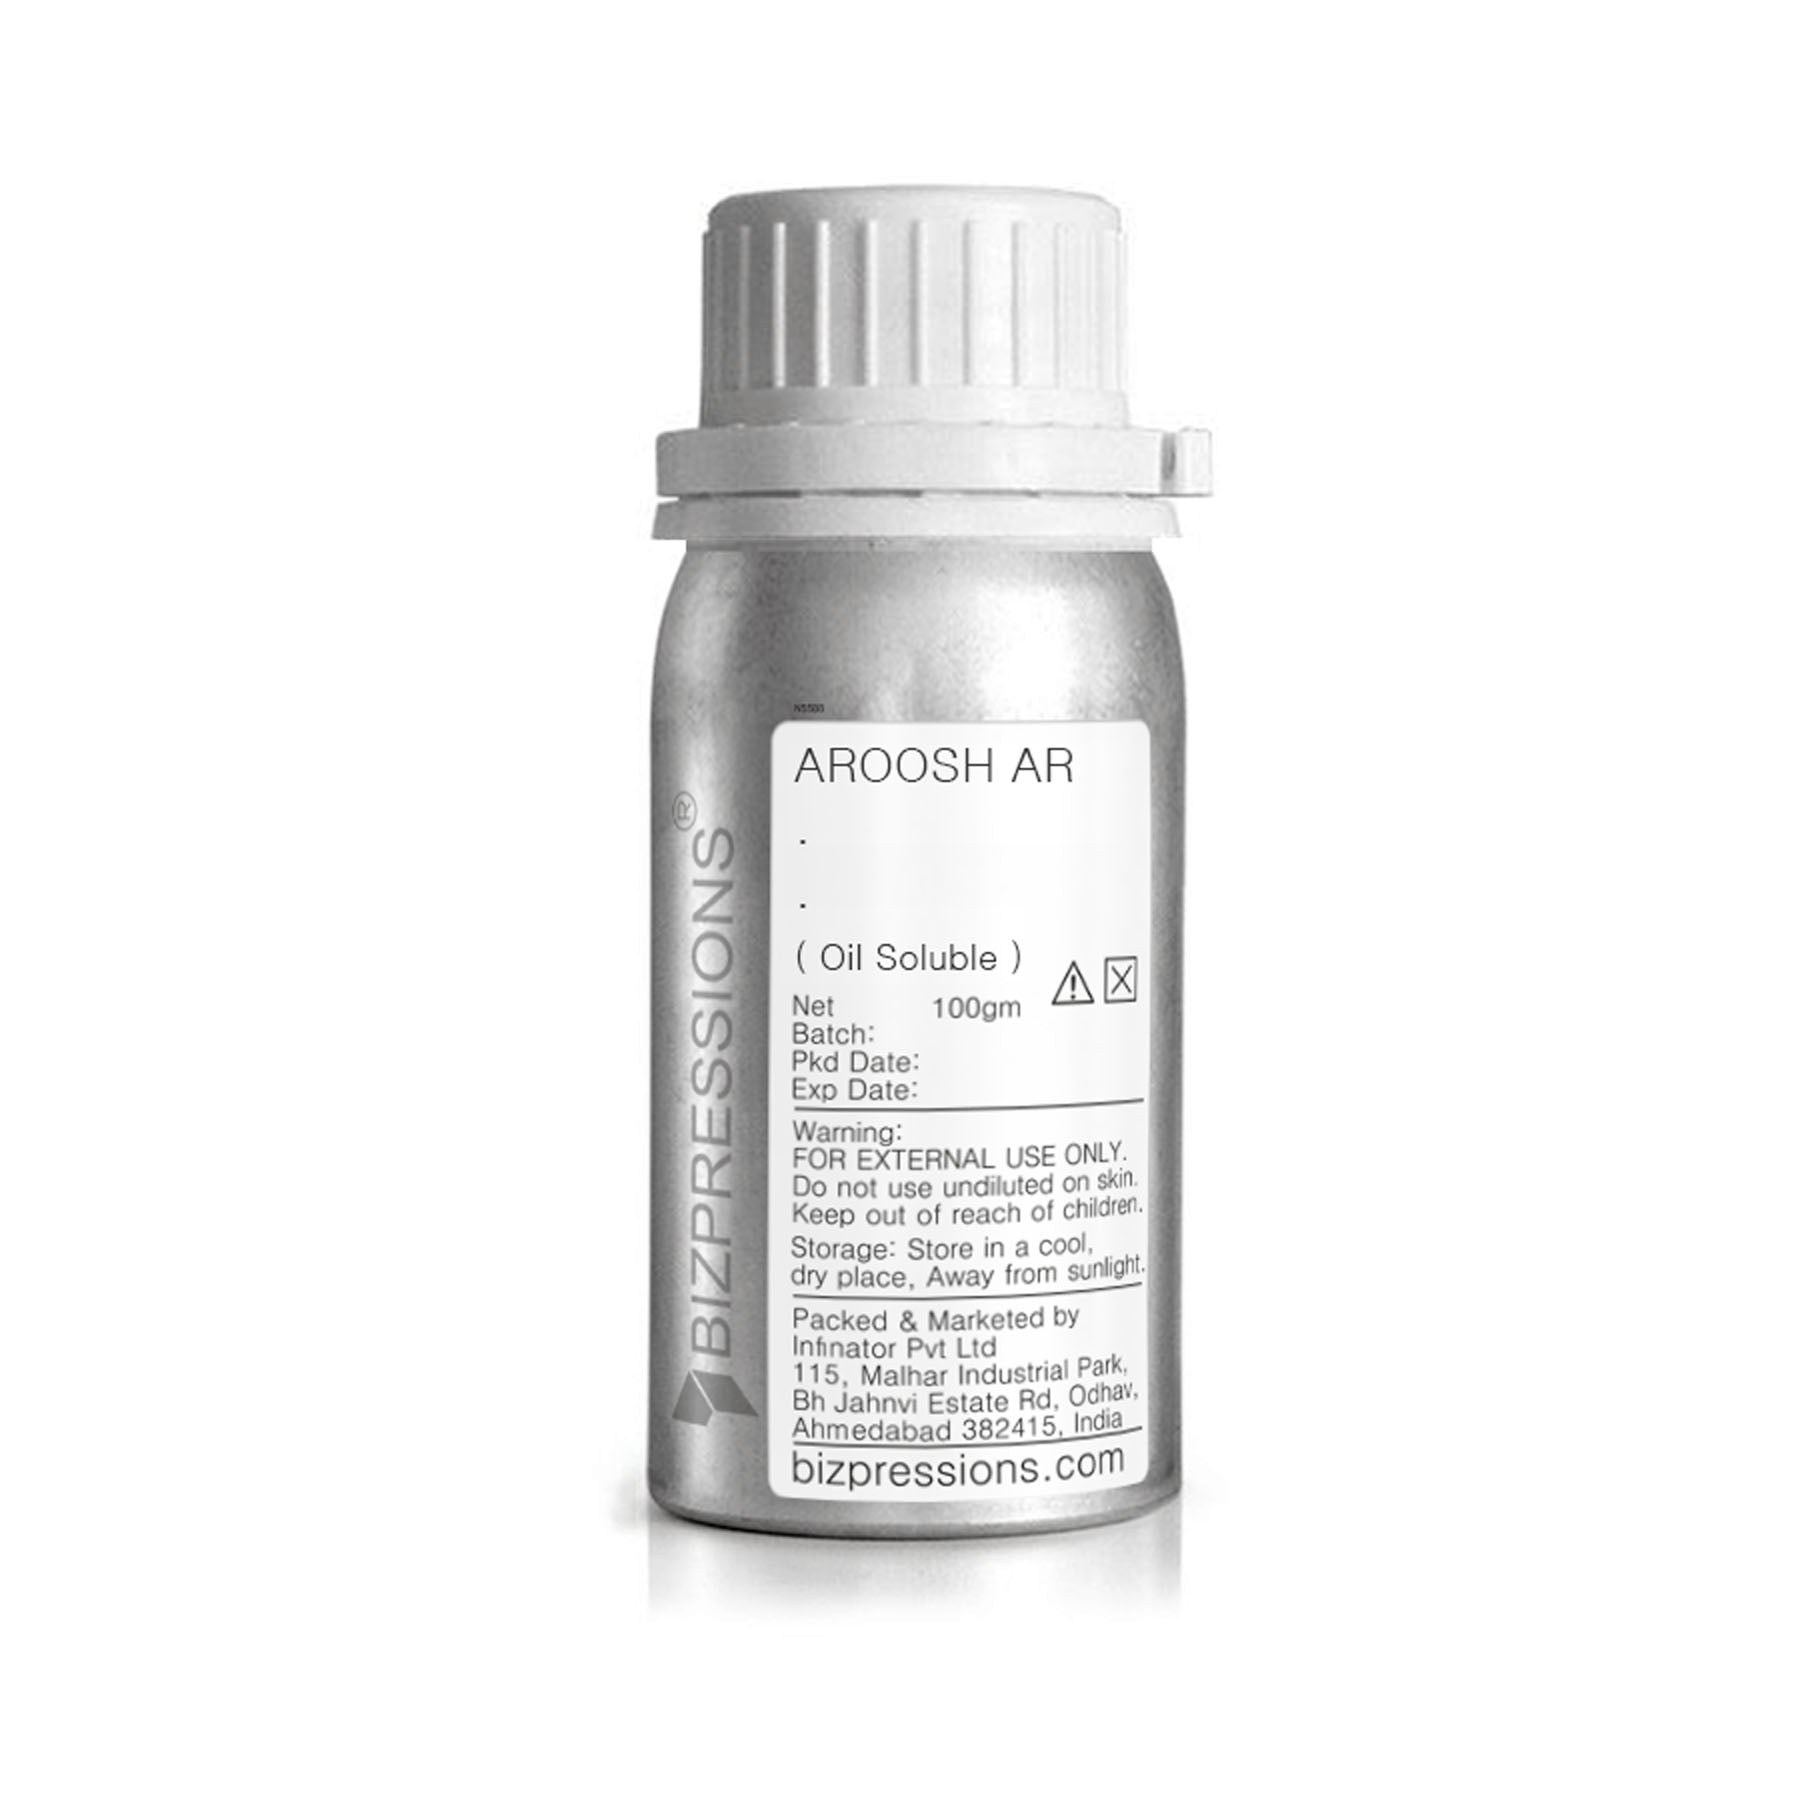 AROOSH AR - Fragrance ( Oil Soluble ) - 100 gm